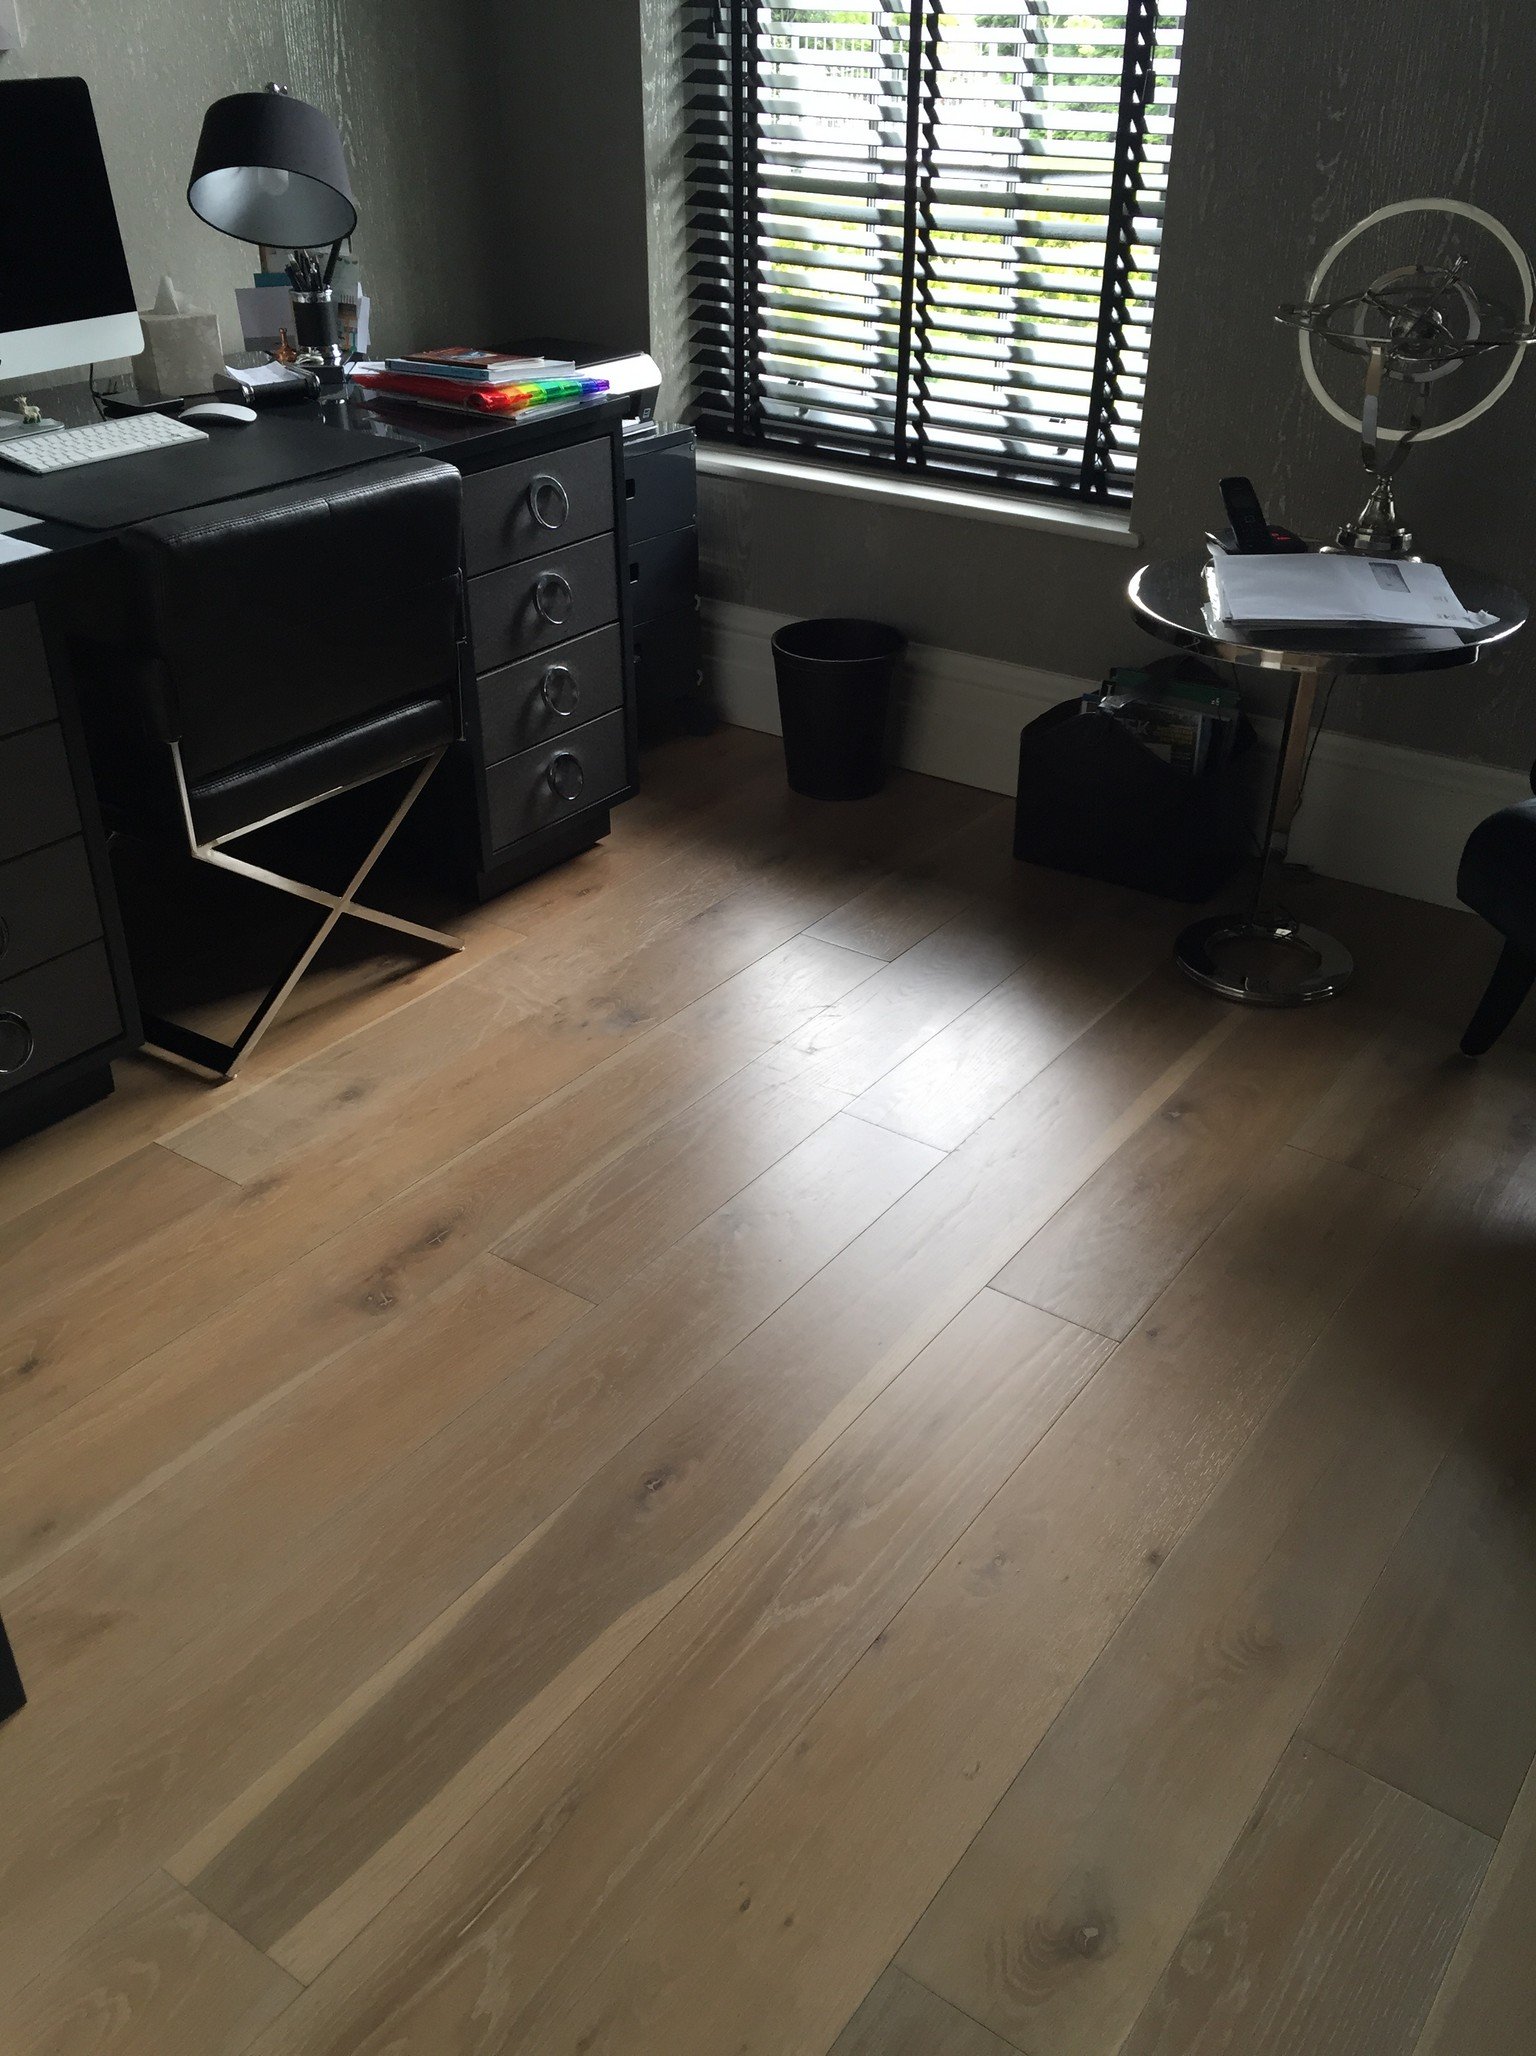 smoked engineered wood flooring in home office